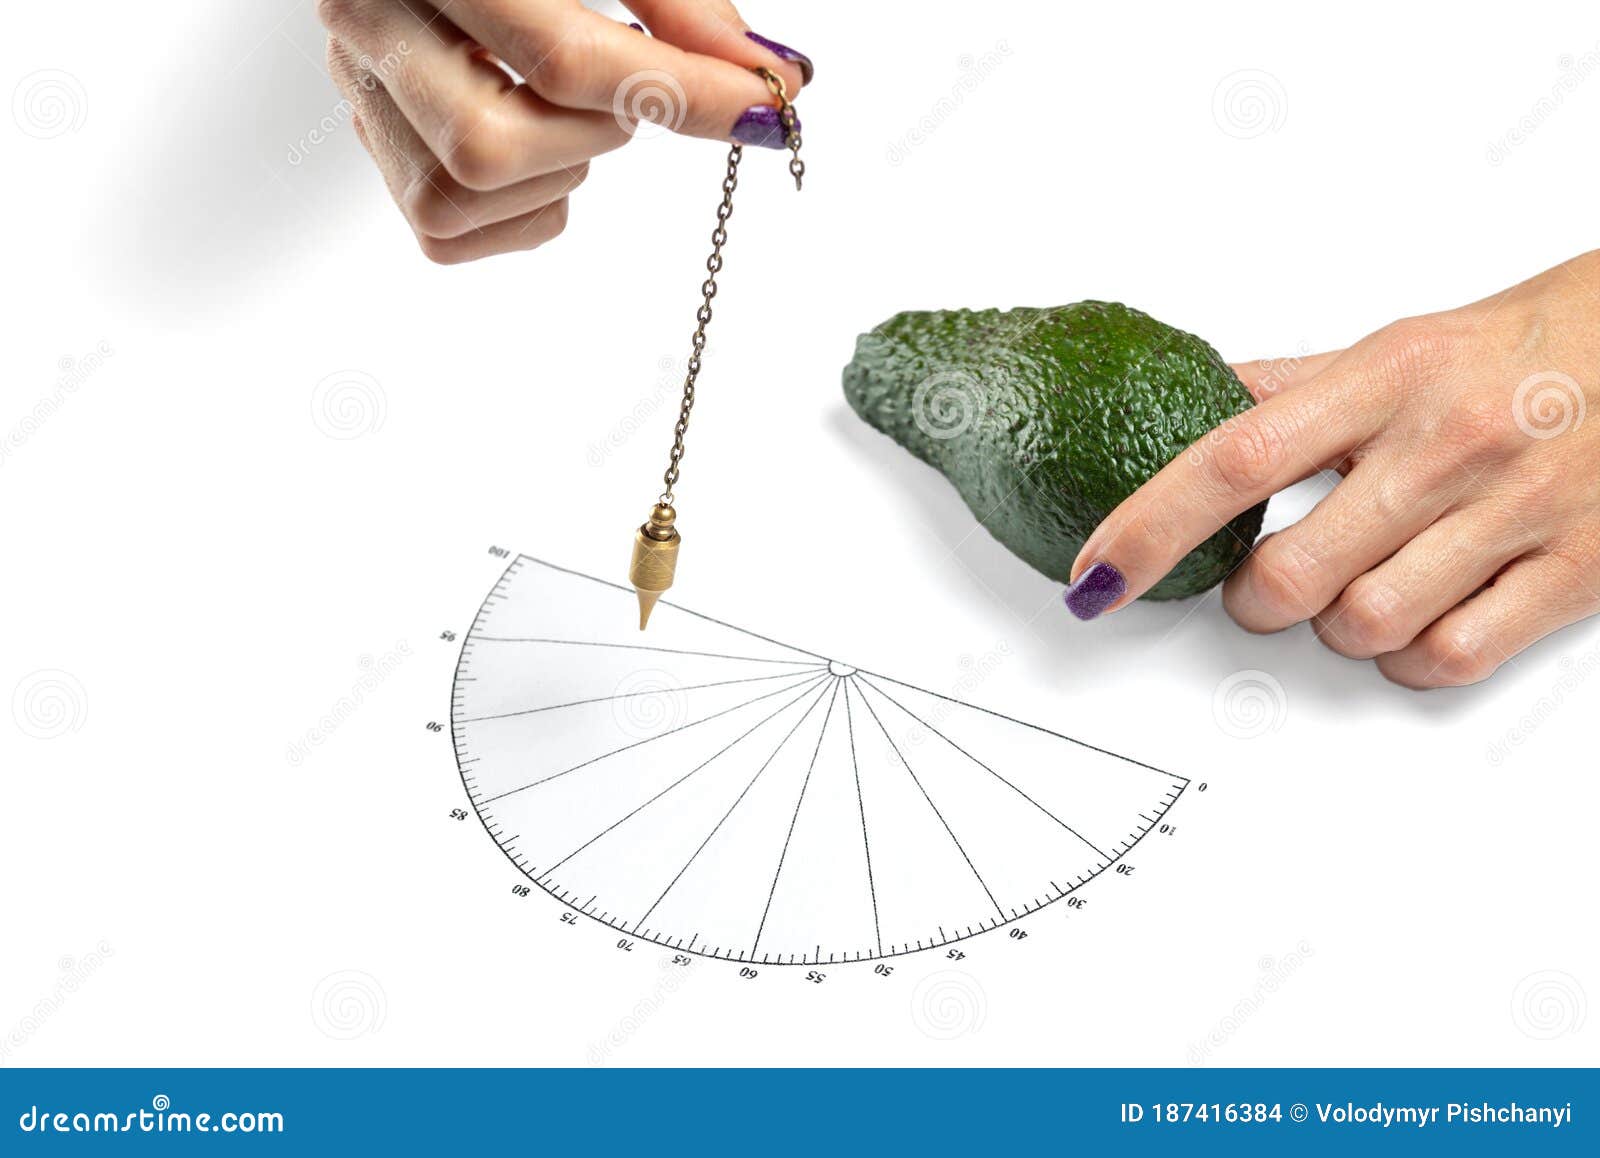 dowser with hand-held pendulum checks the usefulness of avocado